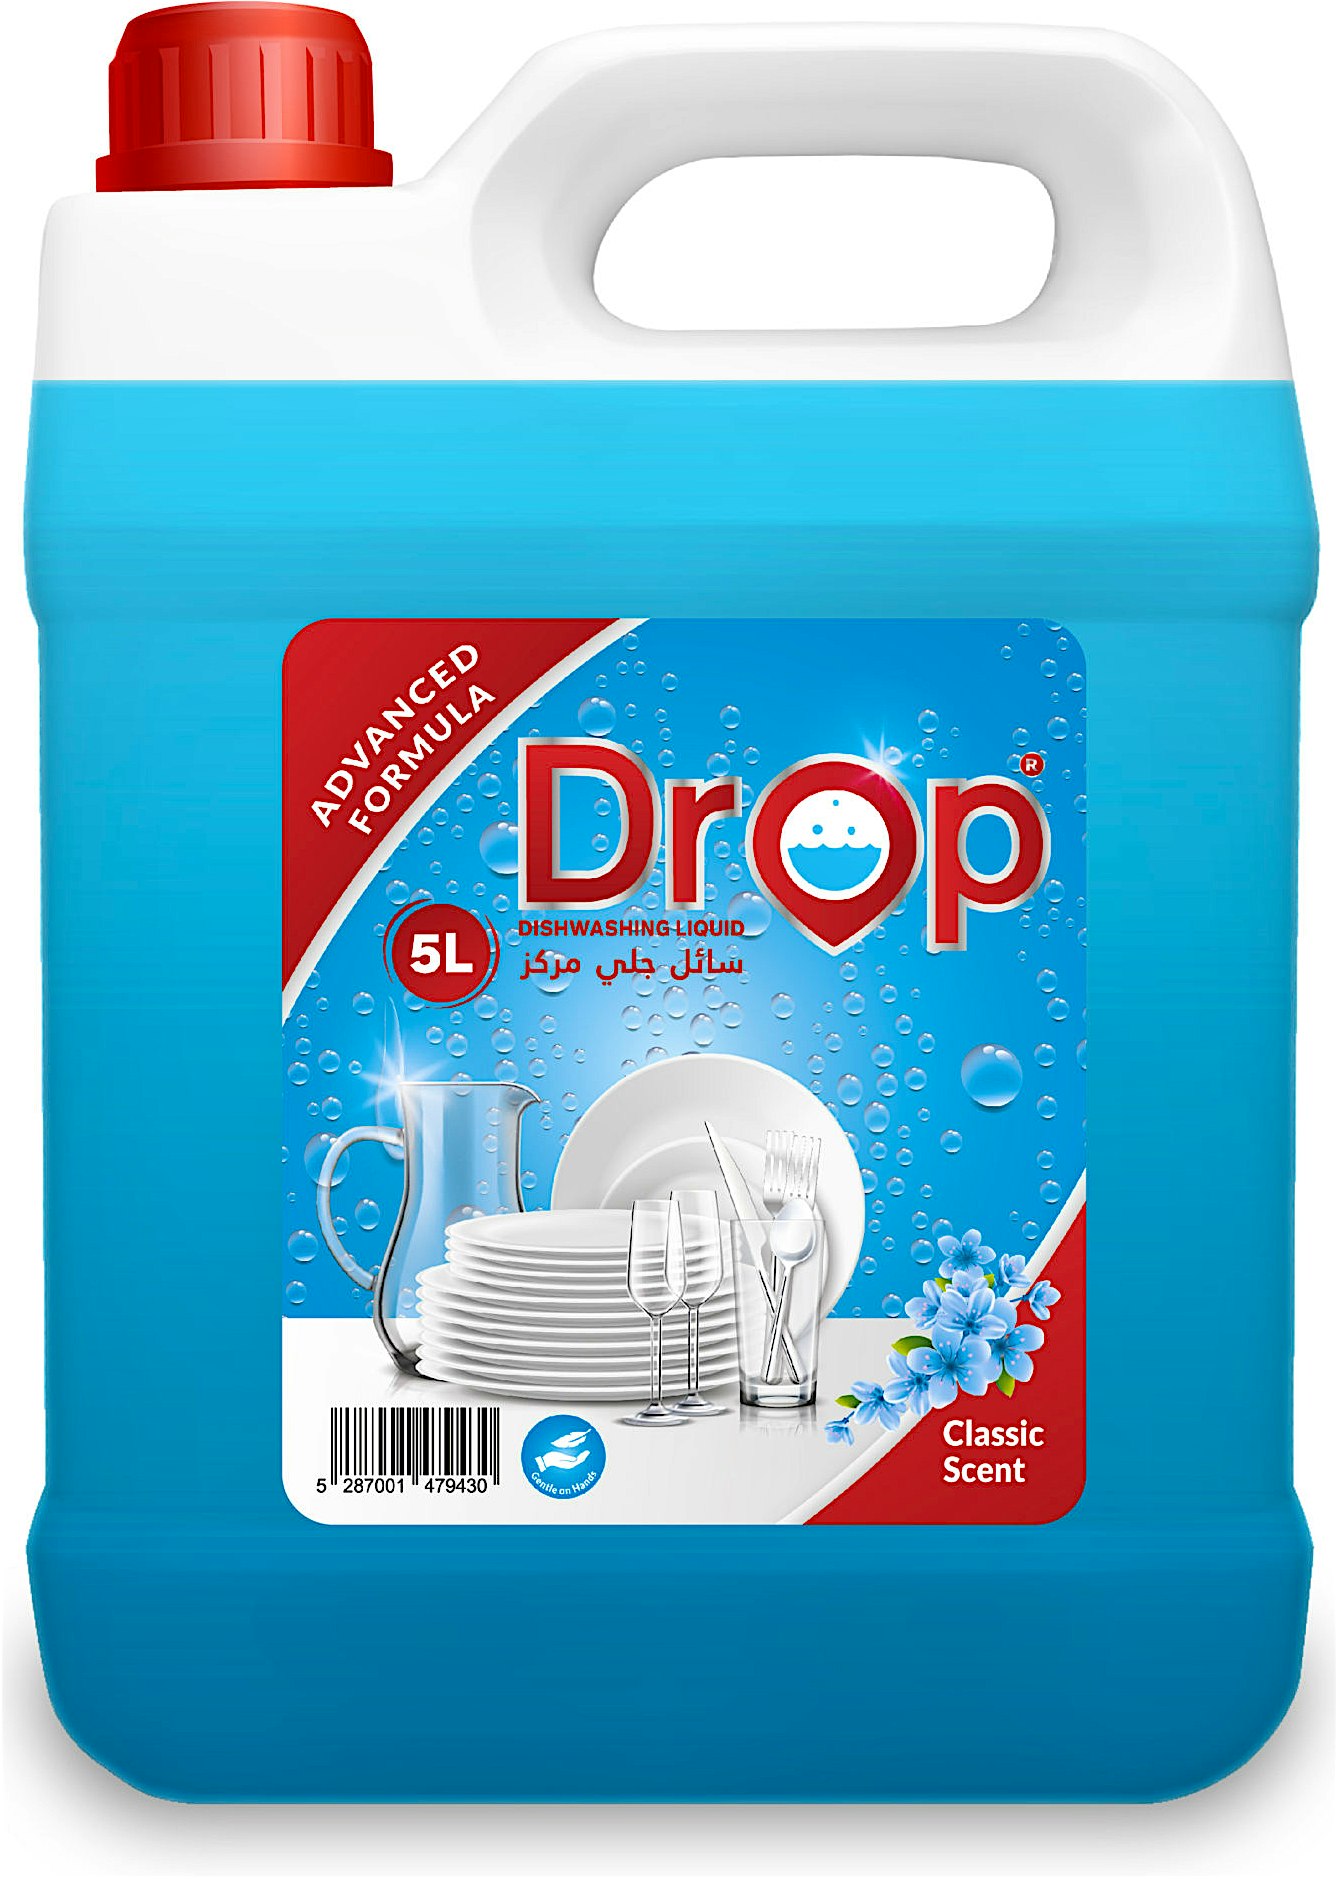 Drop Dishwashing Liquid Classic Scent 5 L